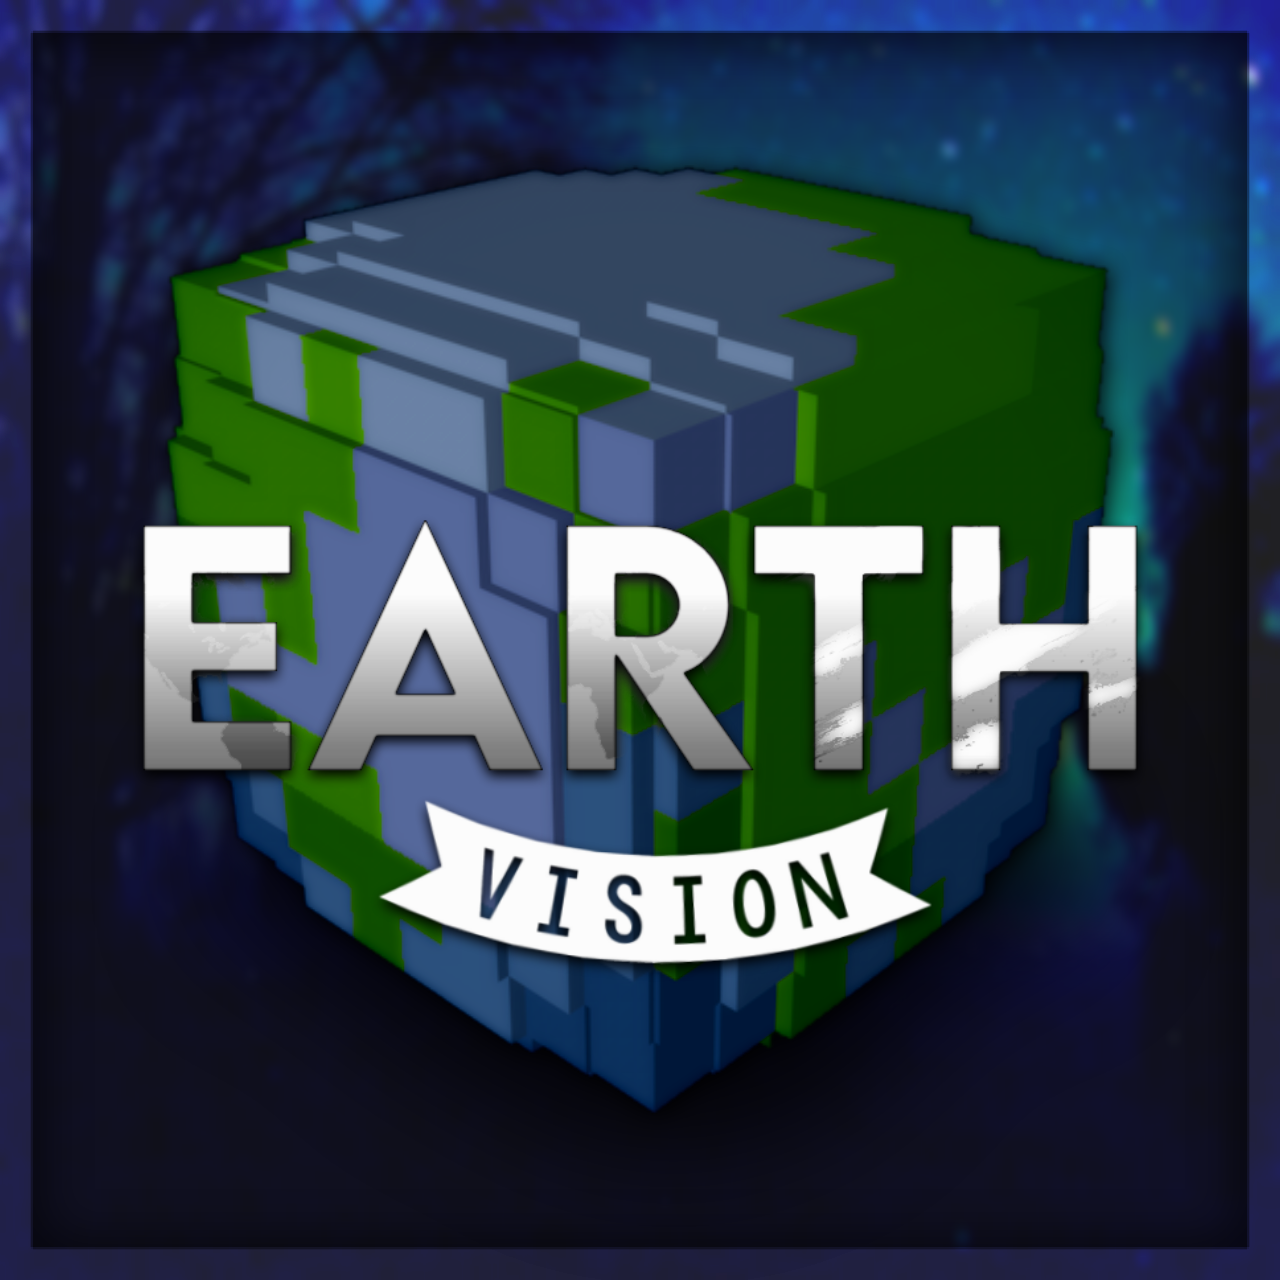 Minecraft Earth Server